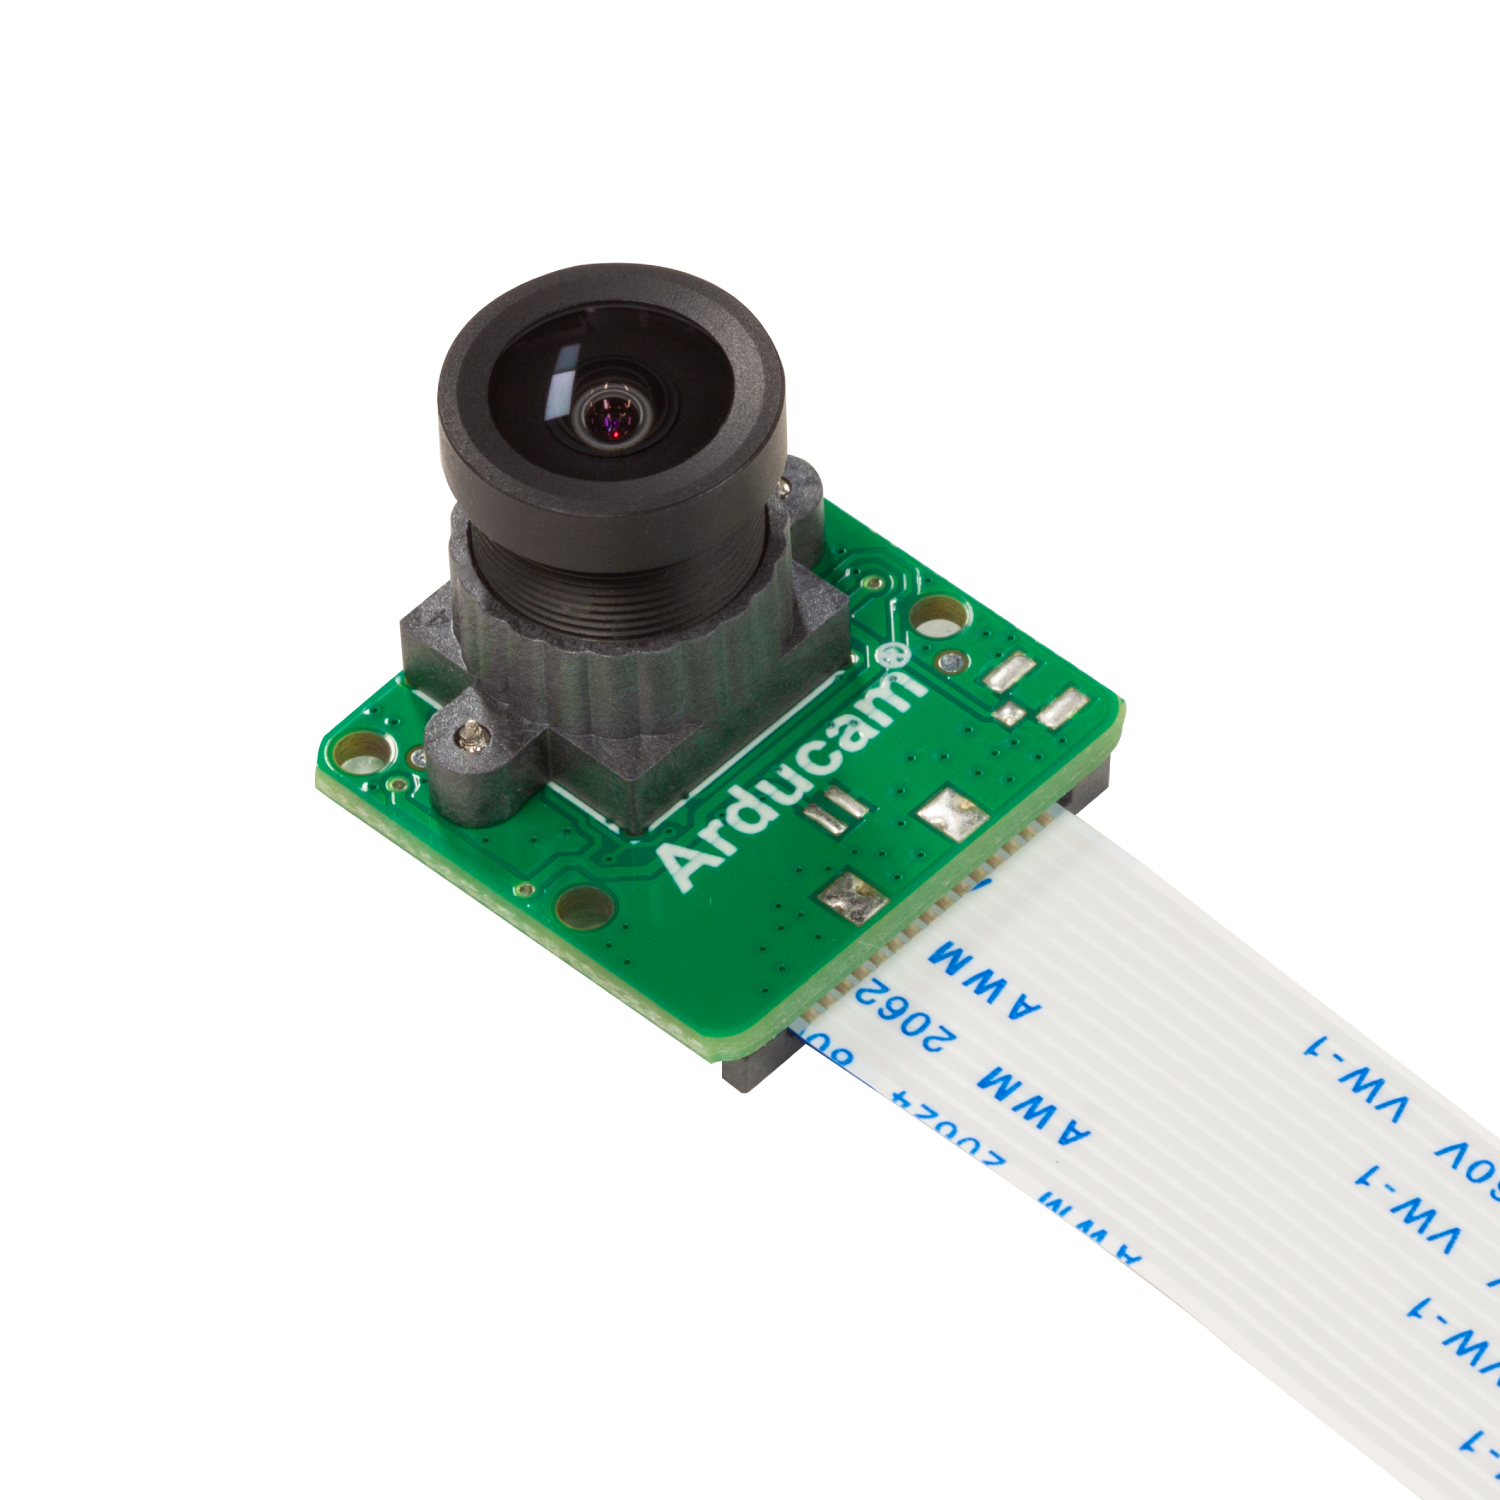 [Discontinued] MINI IMX219 camera module for Jetson Nano/Xavier NX -Arducam